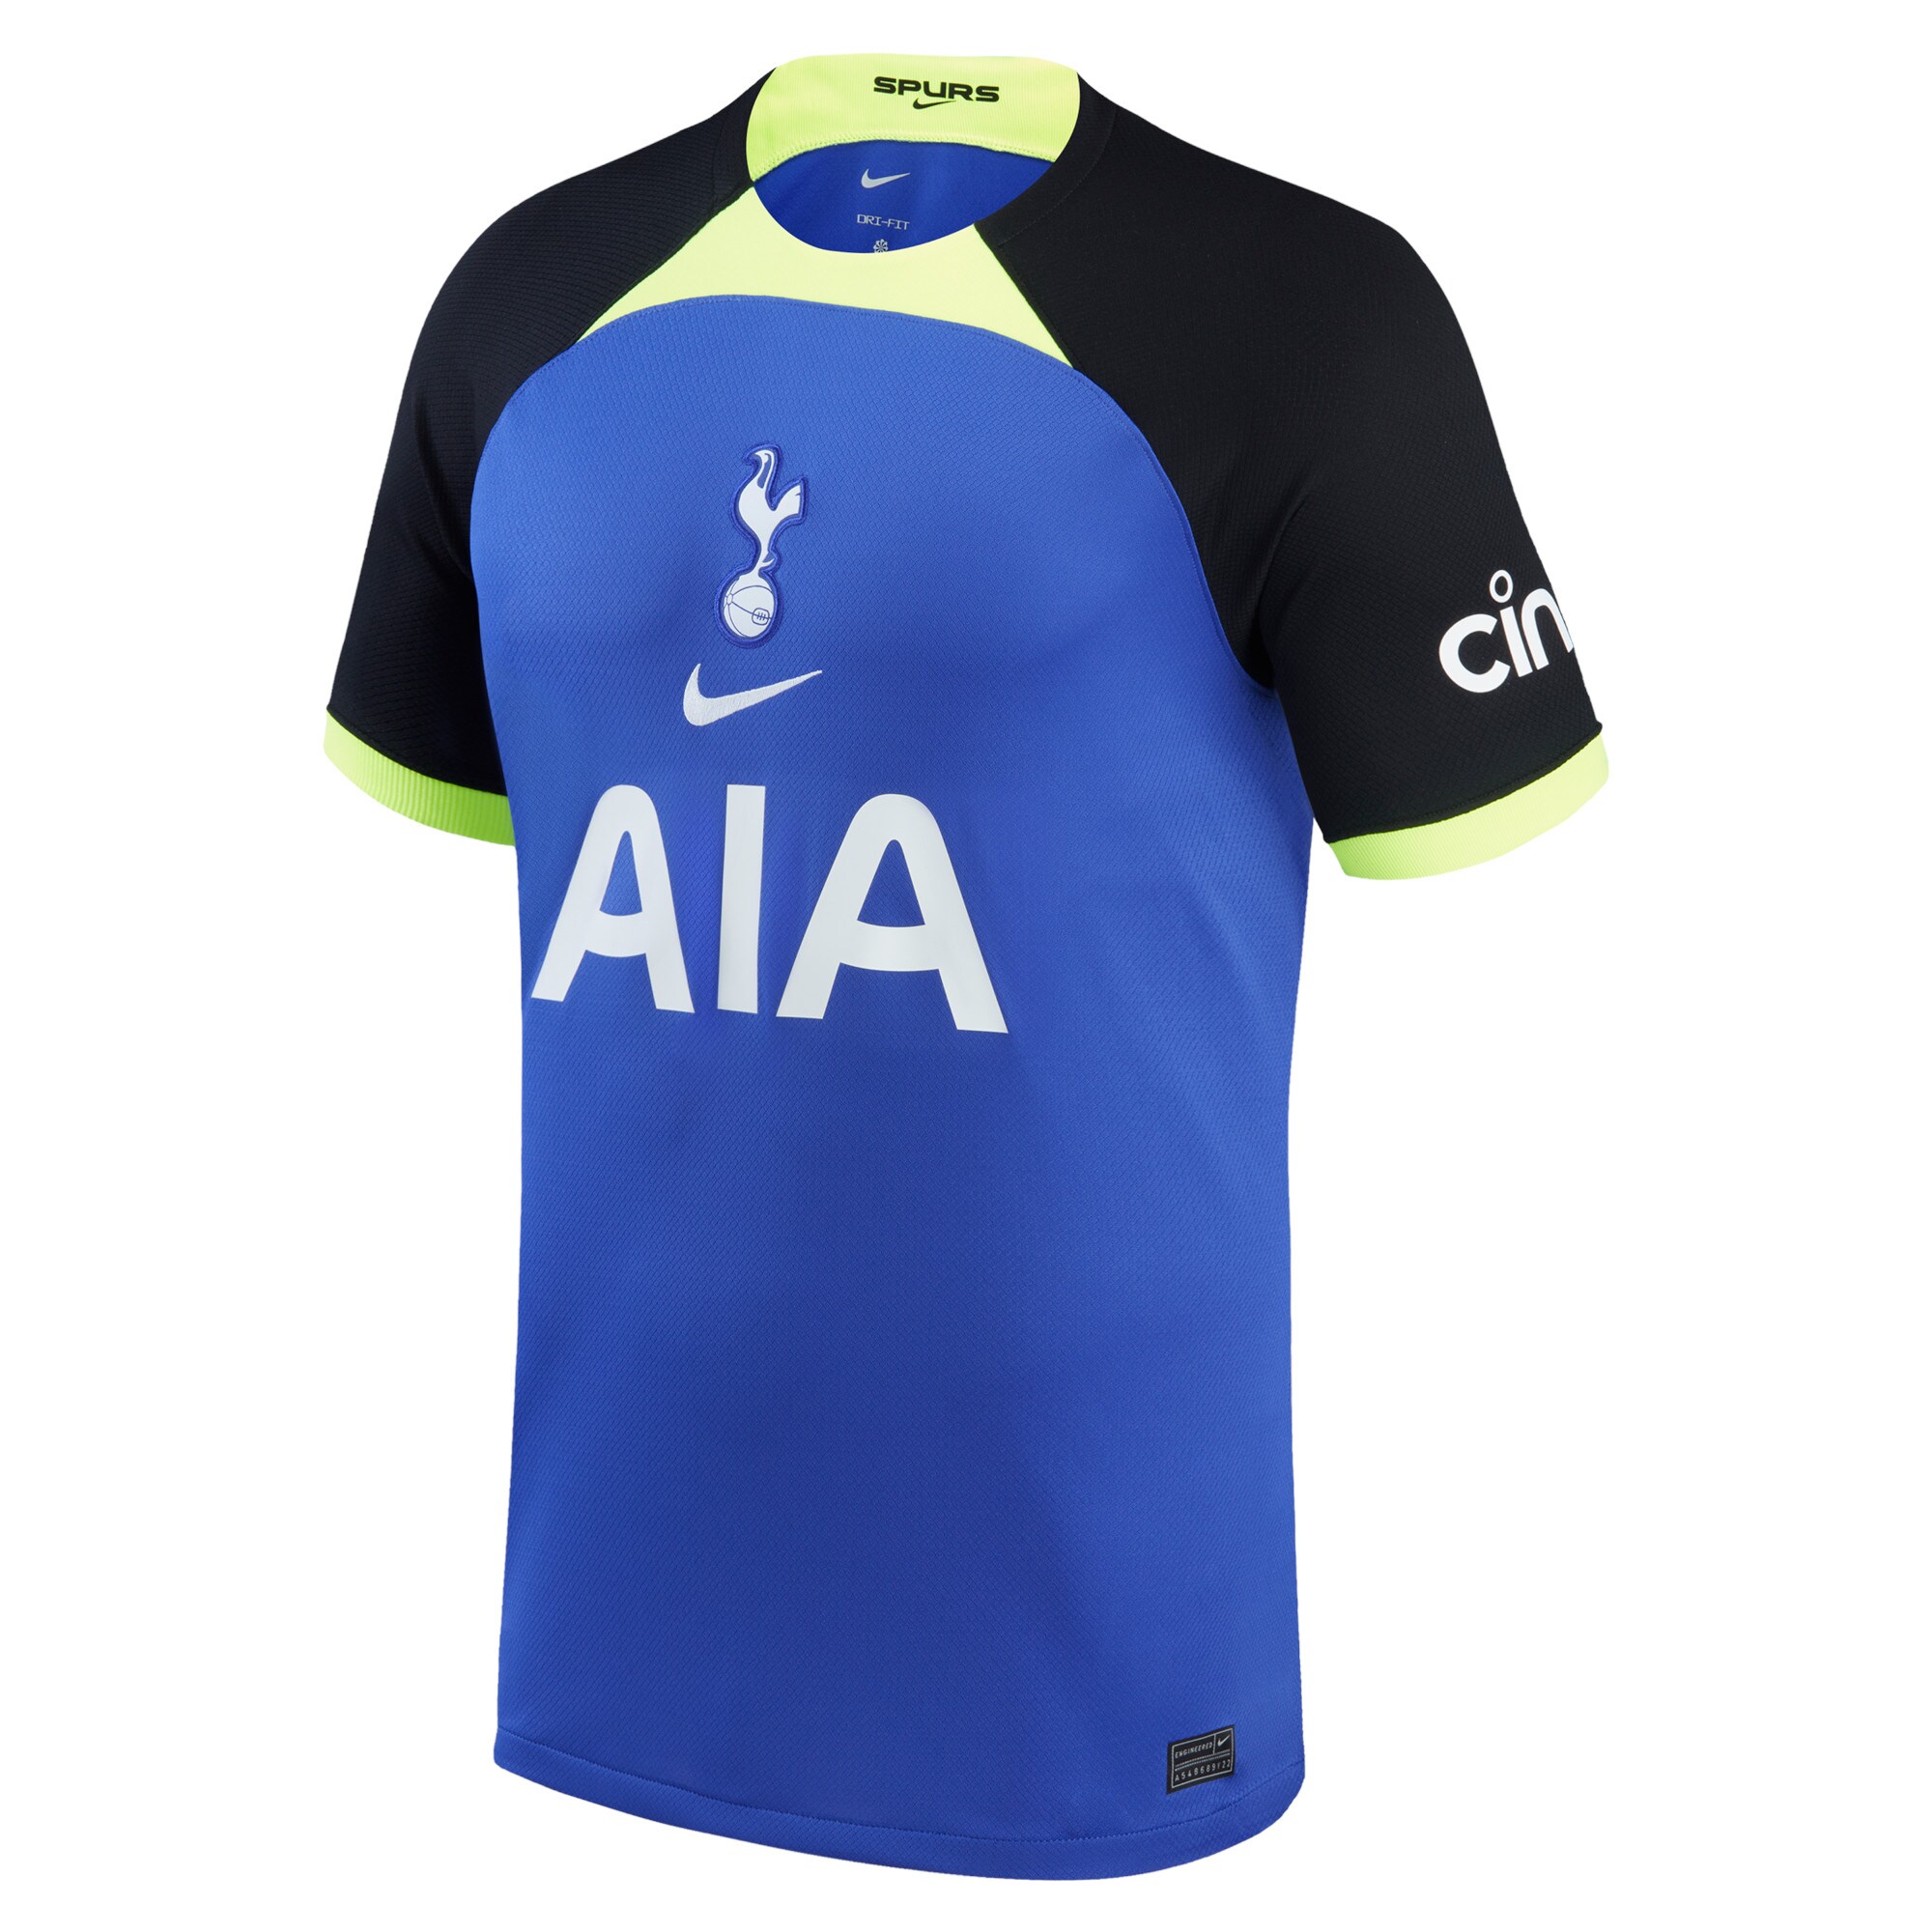 Tottenham Hotspur Away Stadium Shirt 2022-23 - Mens with Son 7 printing